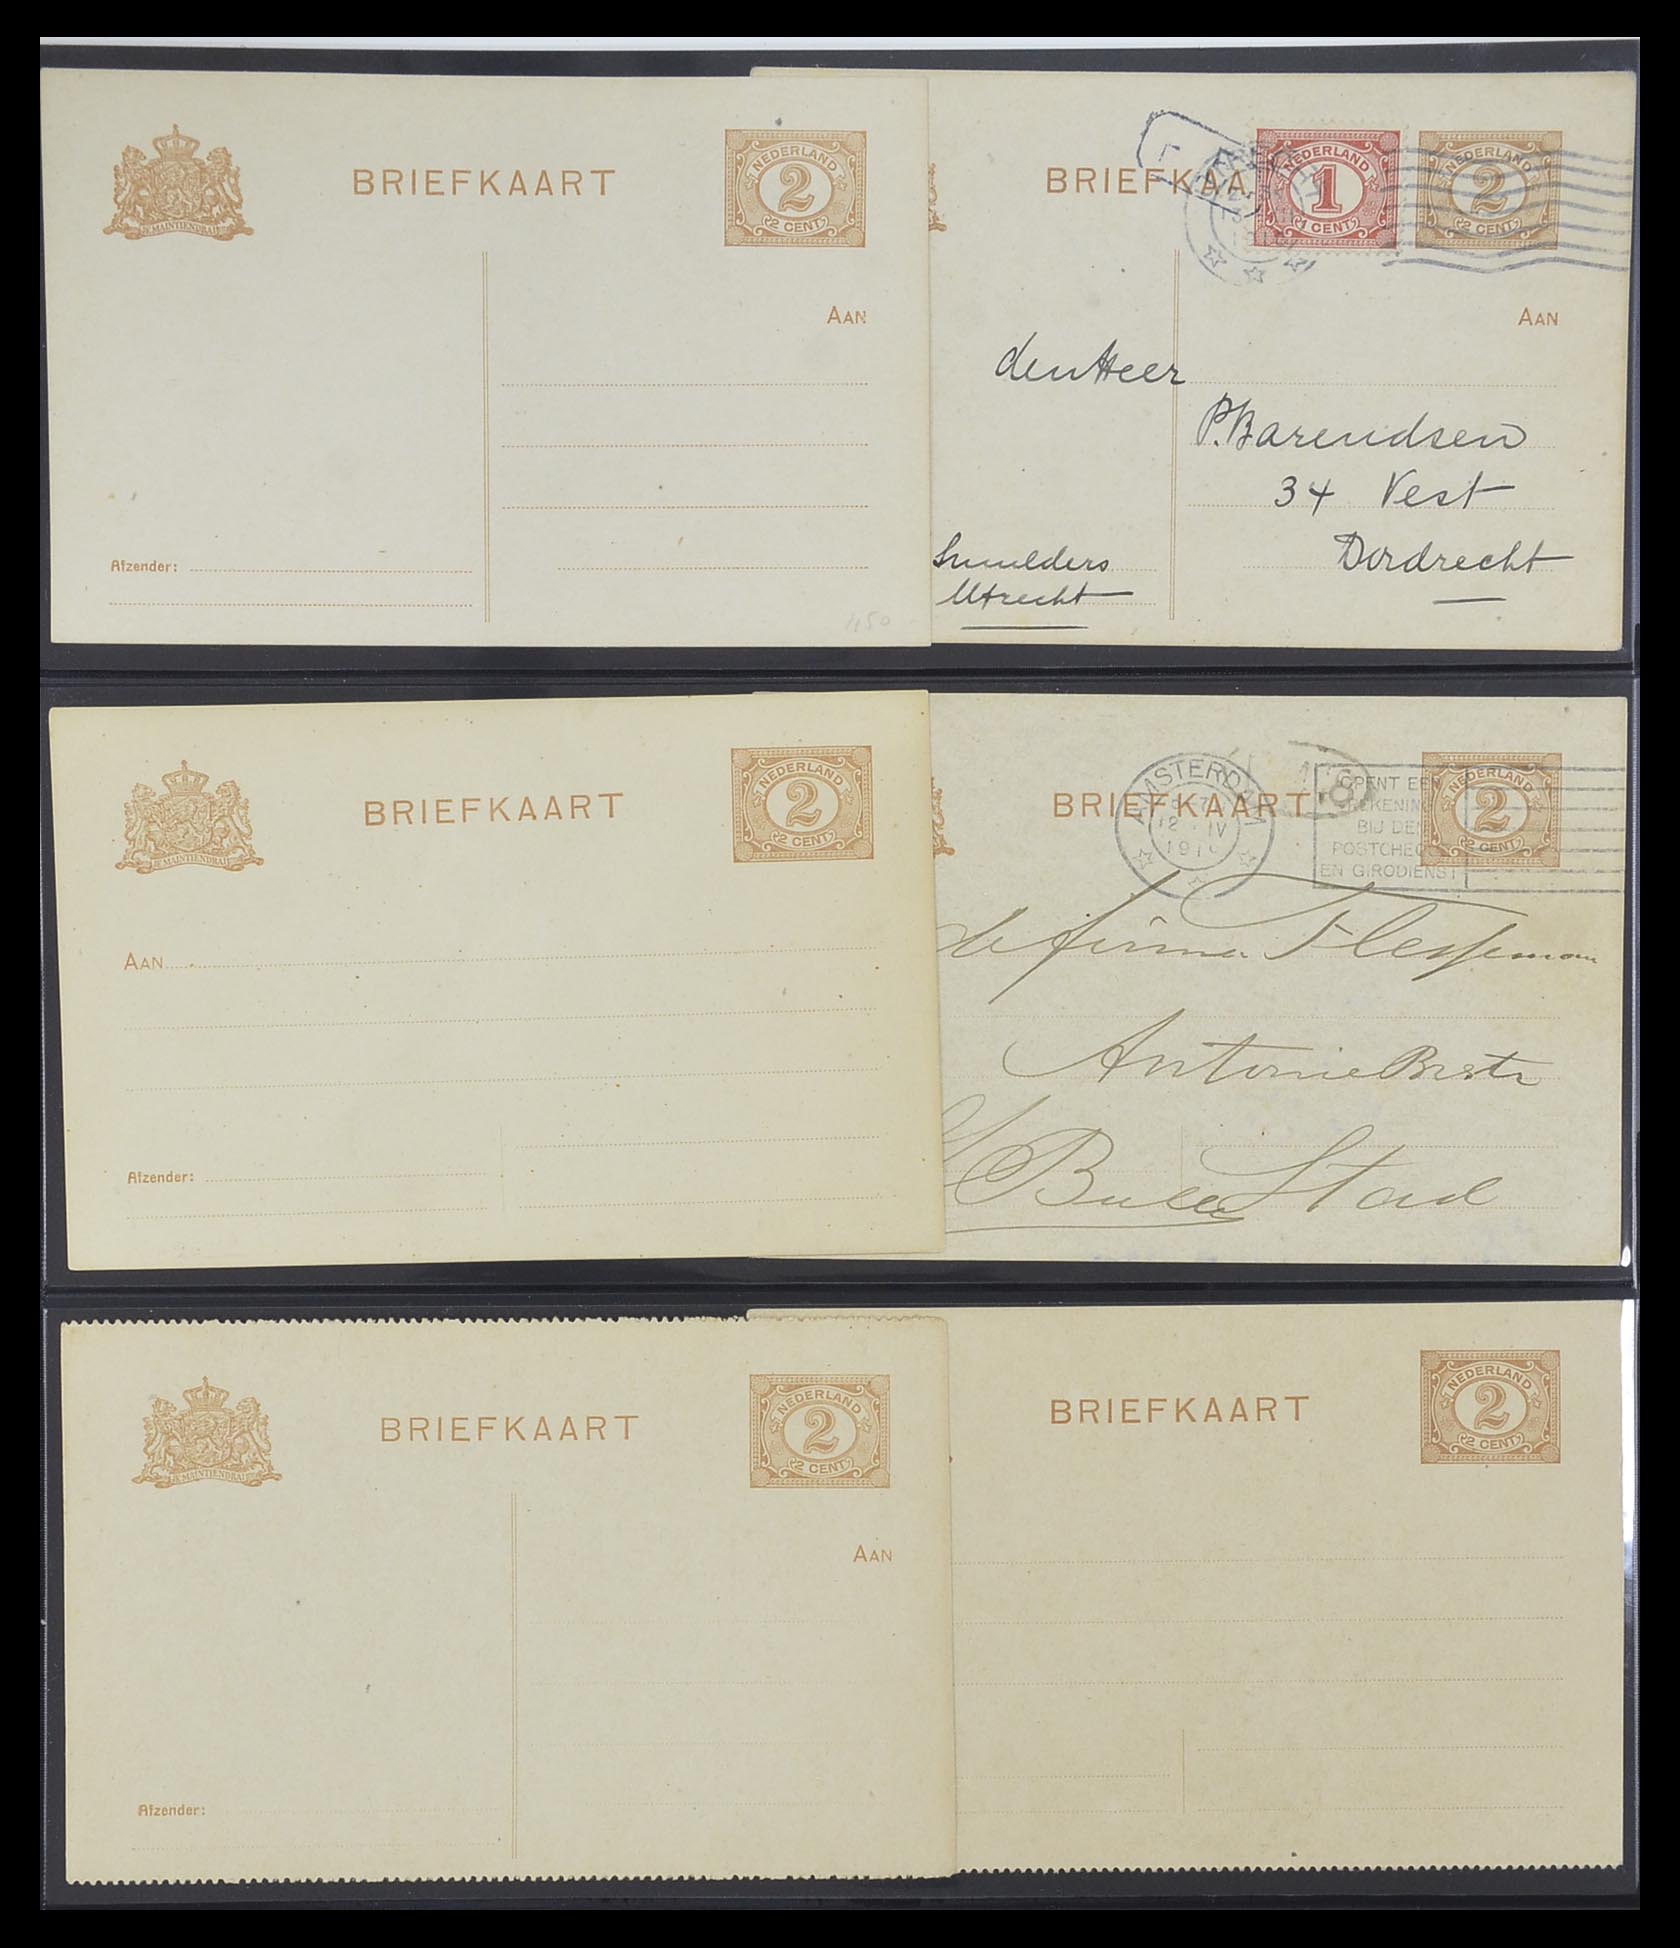 33534 027 - Stamp collection 33534 Netherlands postal stationeries 1871-2010.